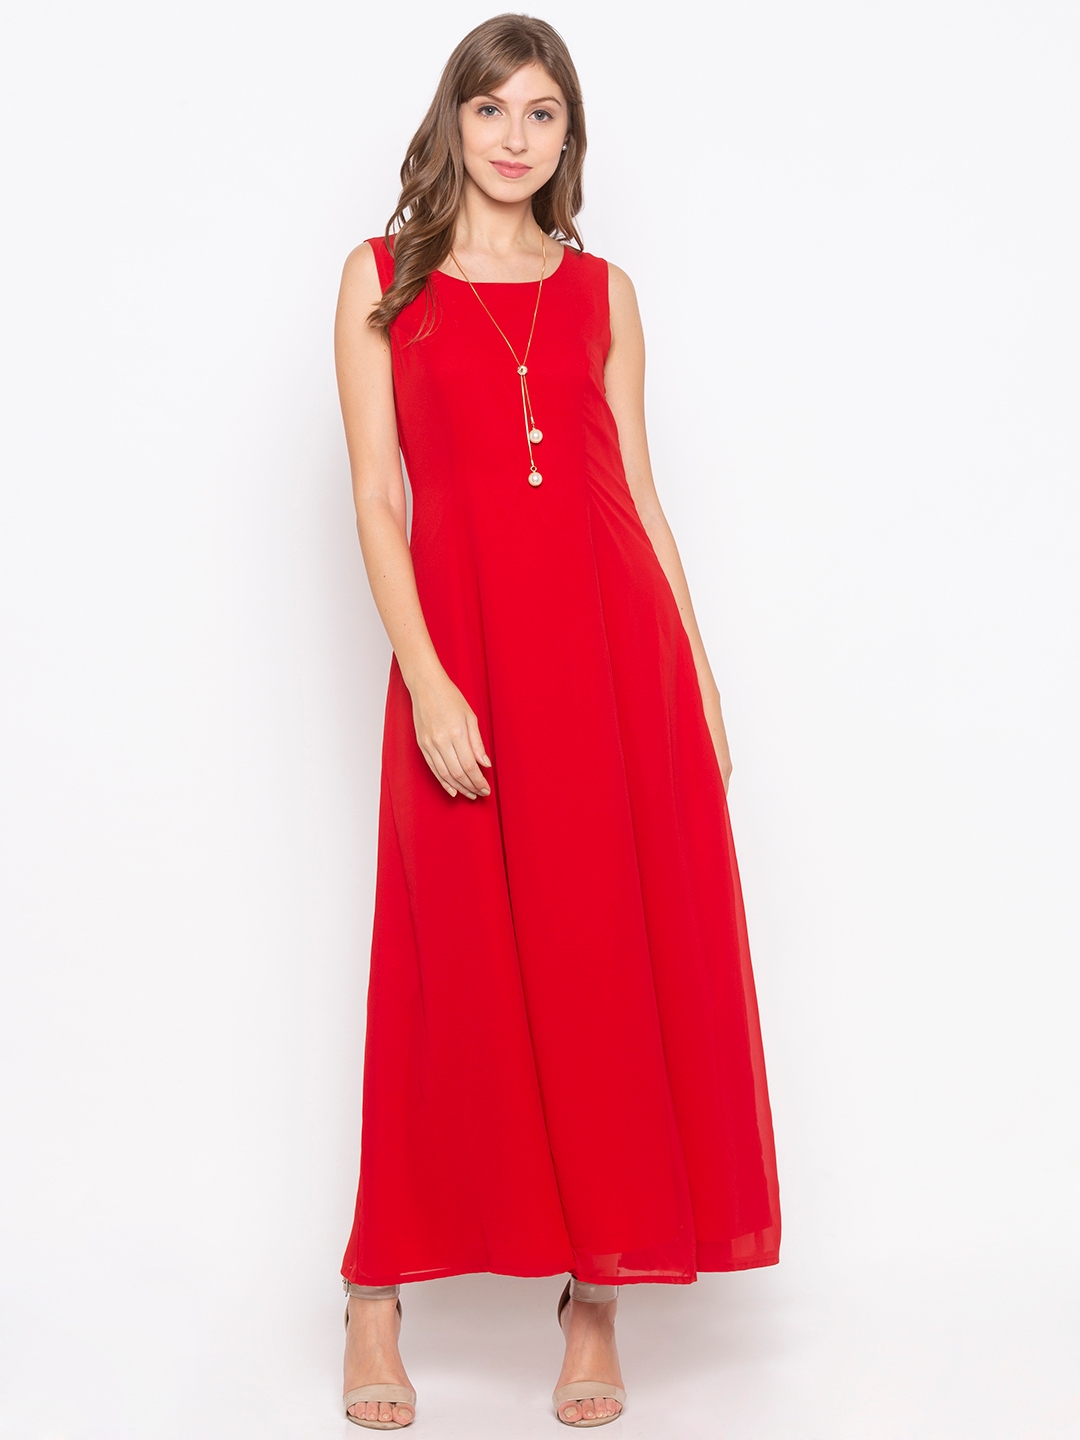 formal red maxi dress